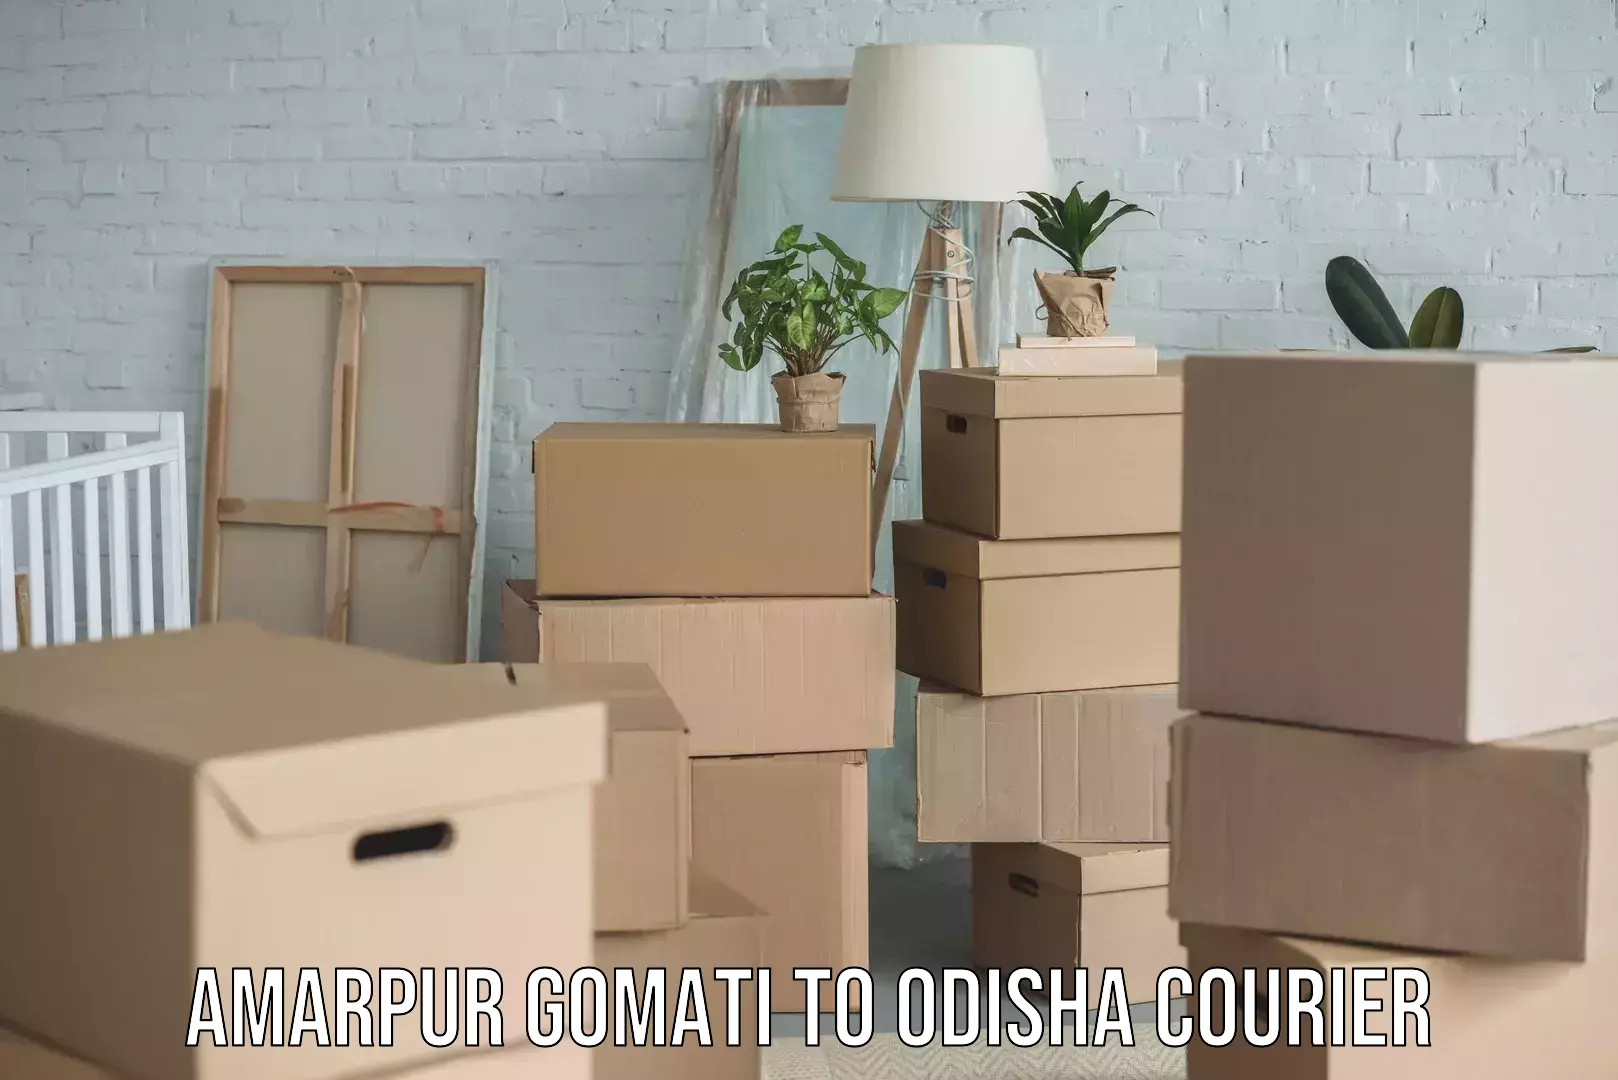 Overnight delivery services Amarpur Gomati to Odisha